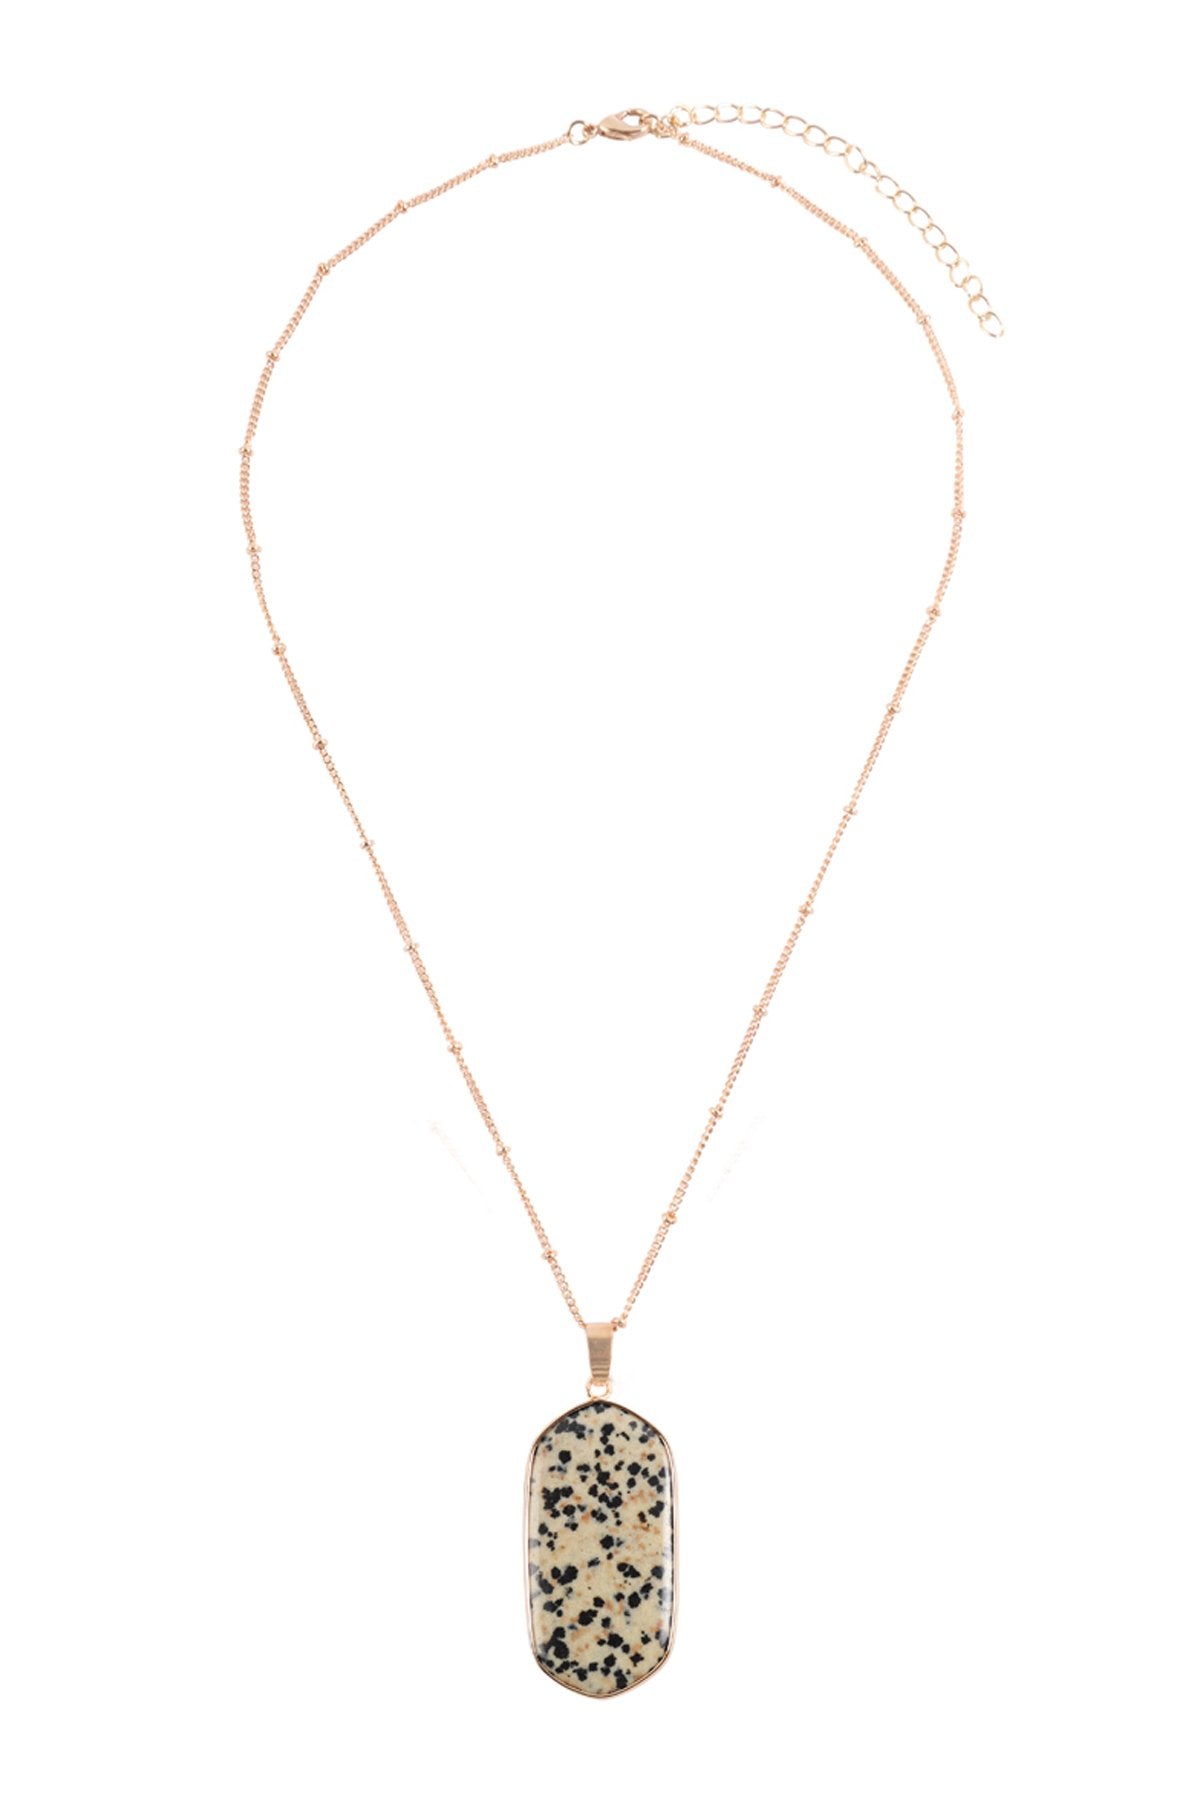 Hdn3184 - Stone Pendant Charm Necklace